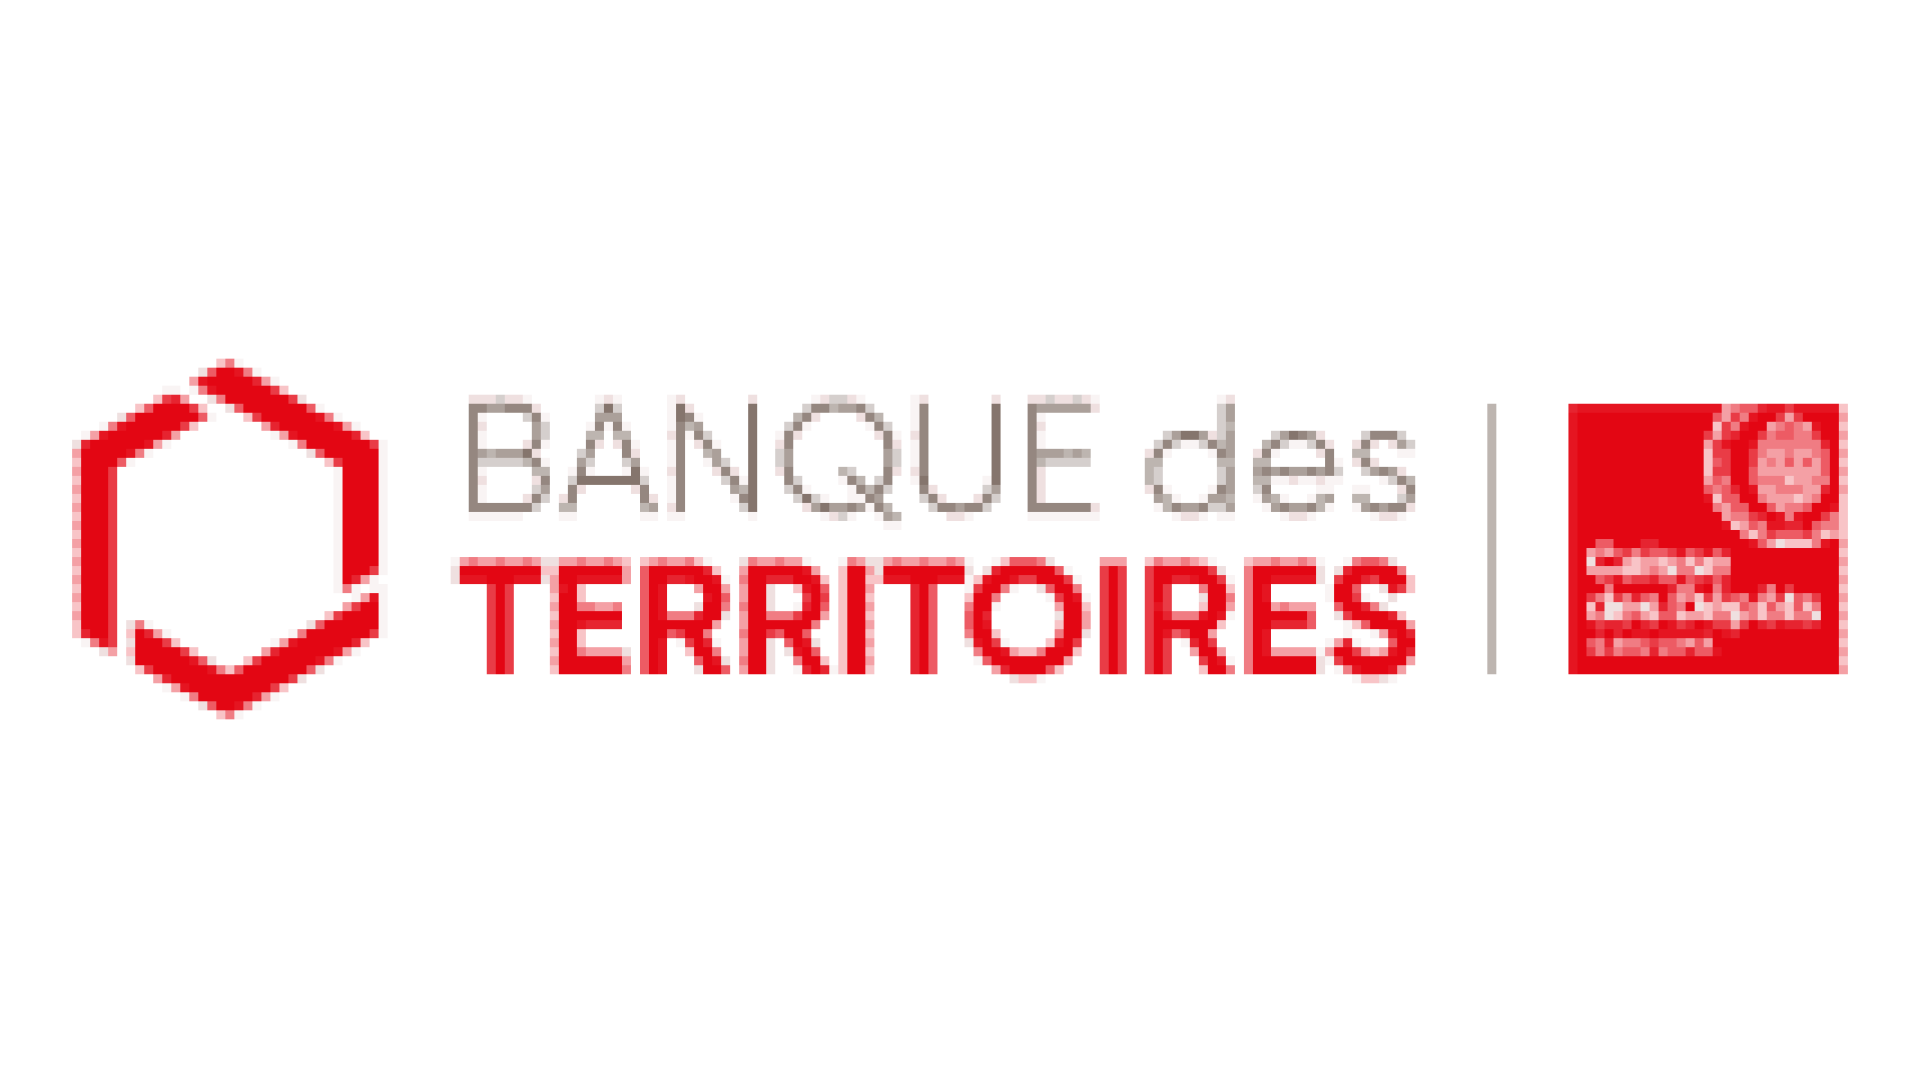 logo banque des territoires